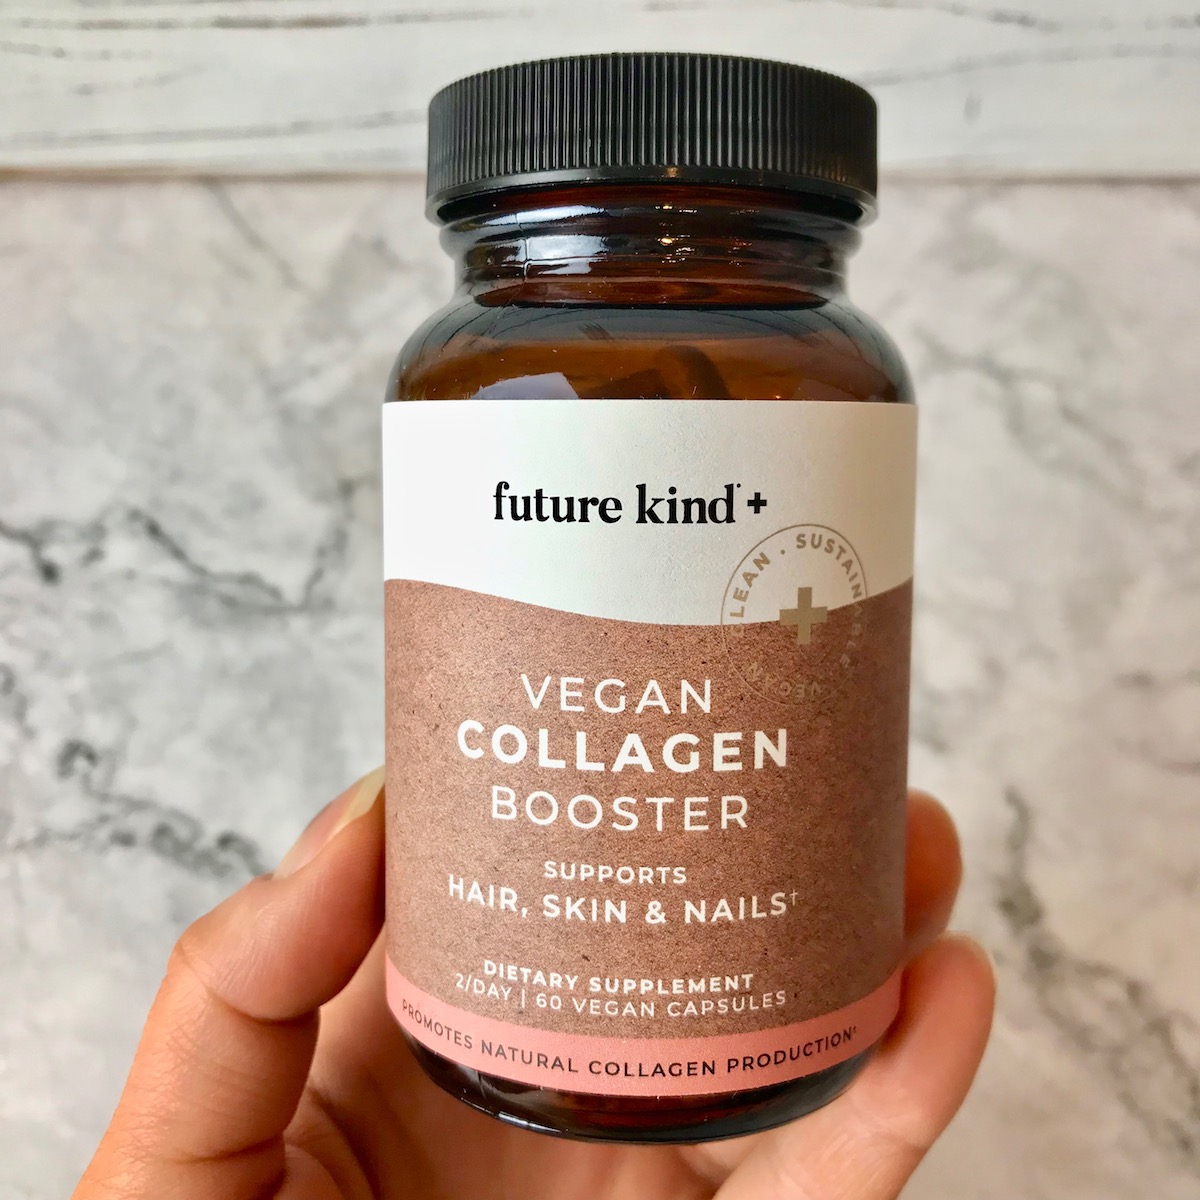 A bottle of Future Kind collagen boosting supplement.